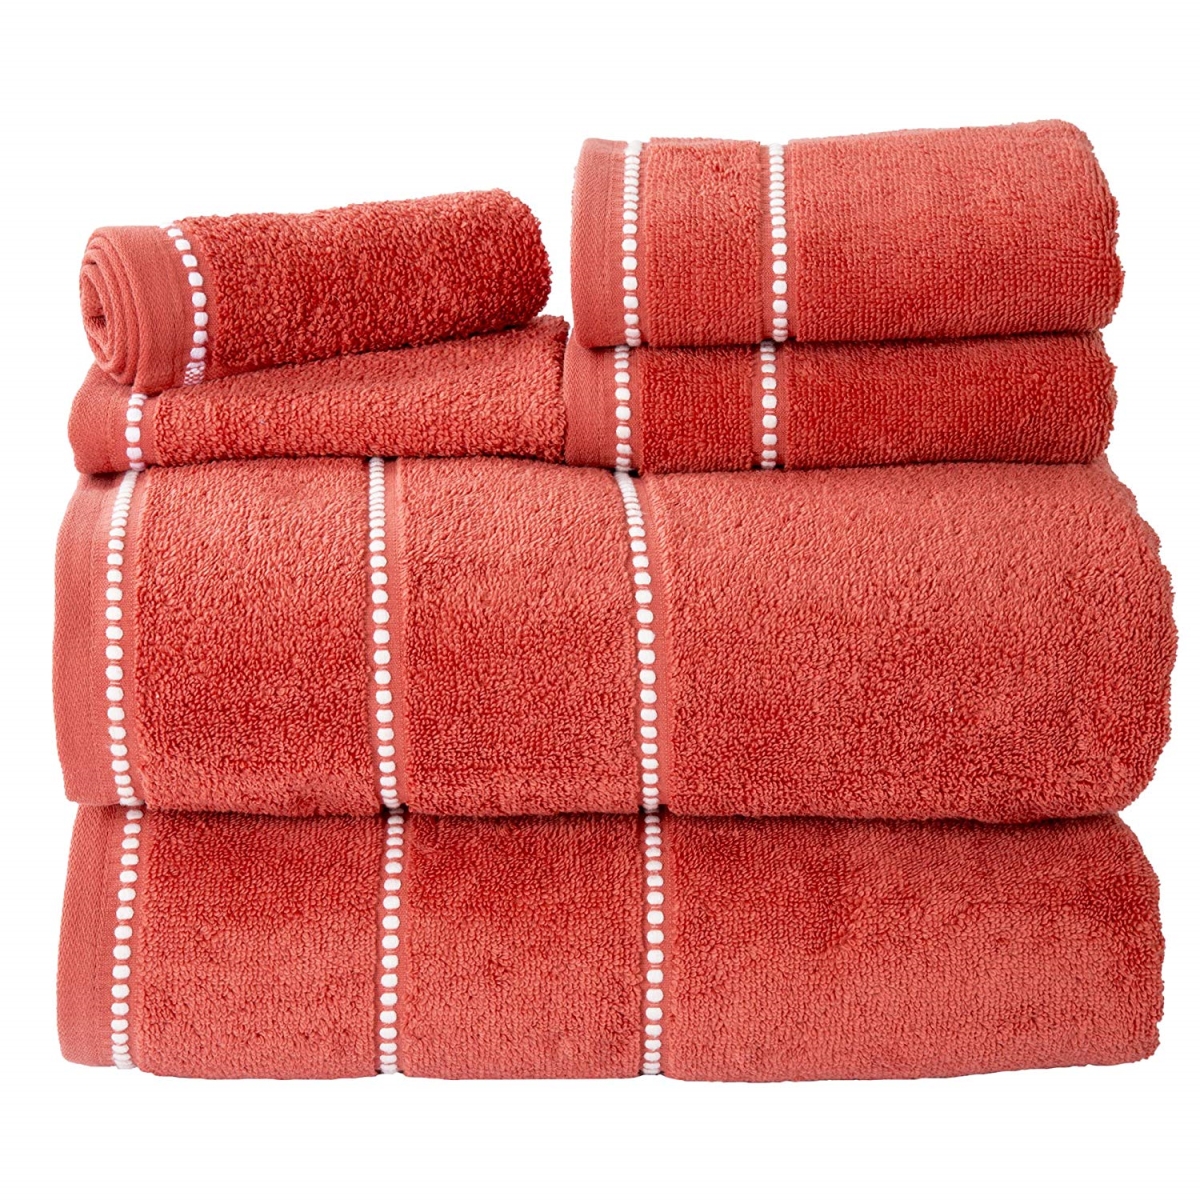 Picture of Bedford Home 67A-76955 Quick Dry 100 Percent Cotton Zero Twist 6 Piece Towel Set - Brick